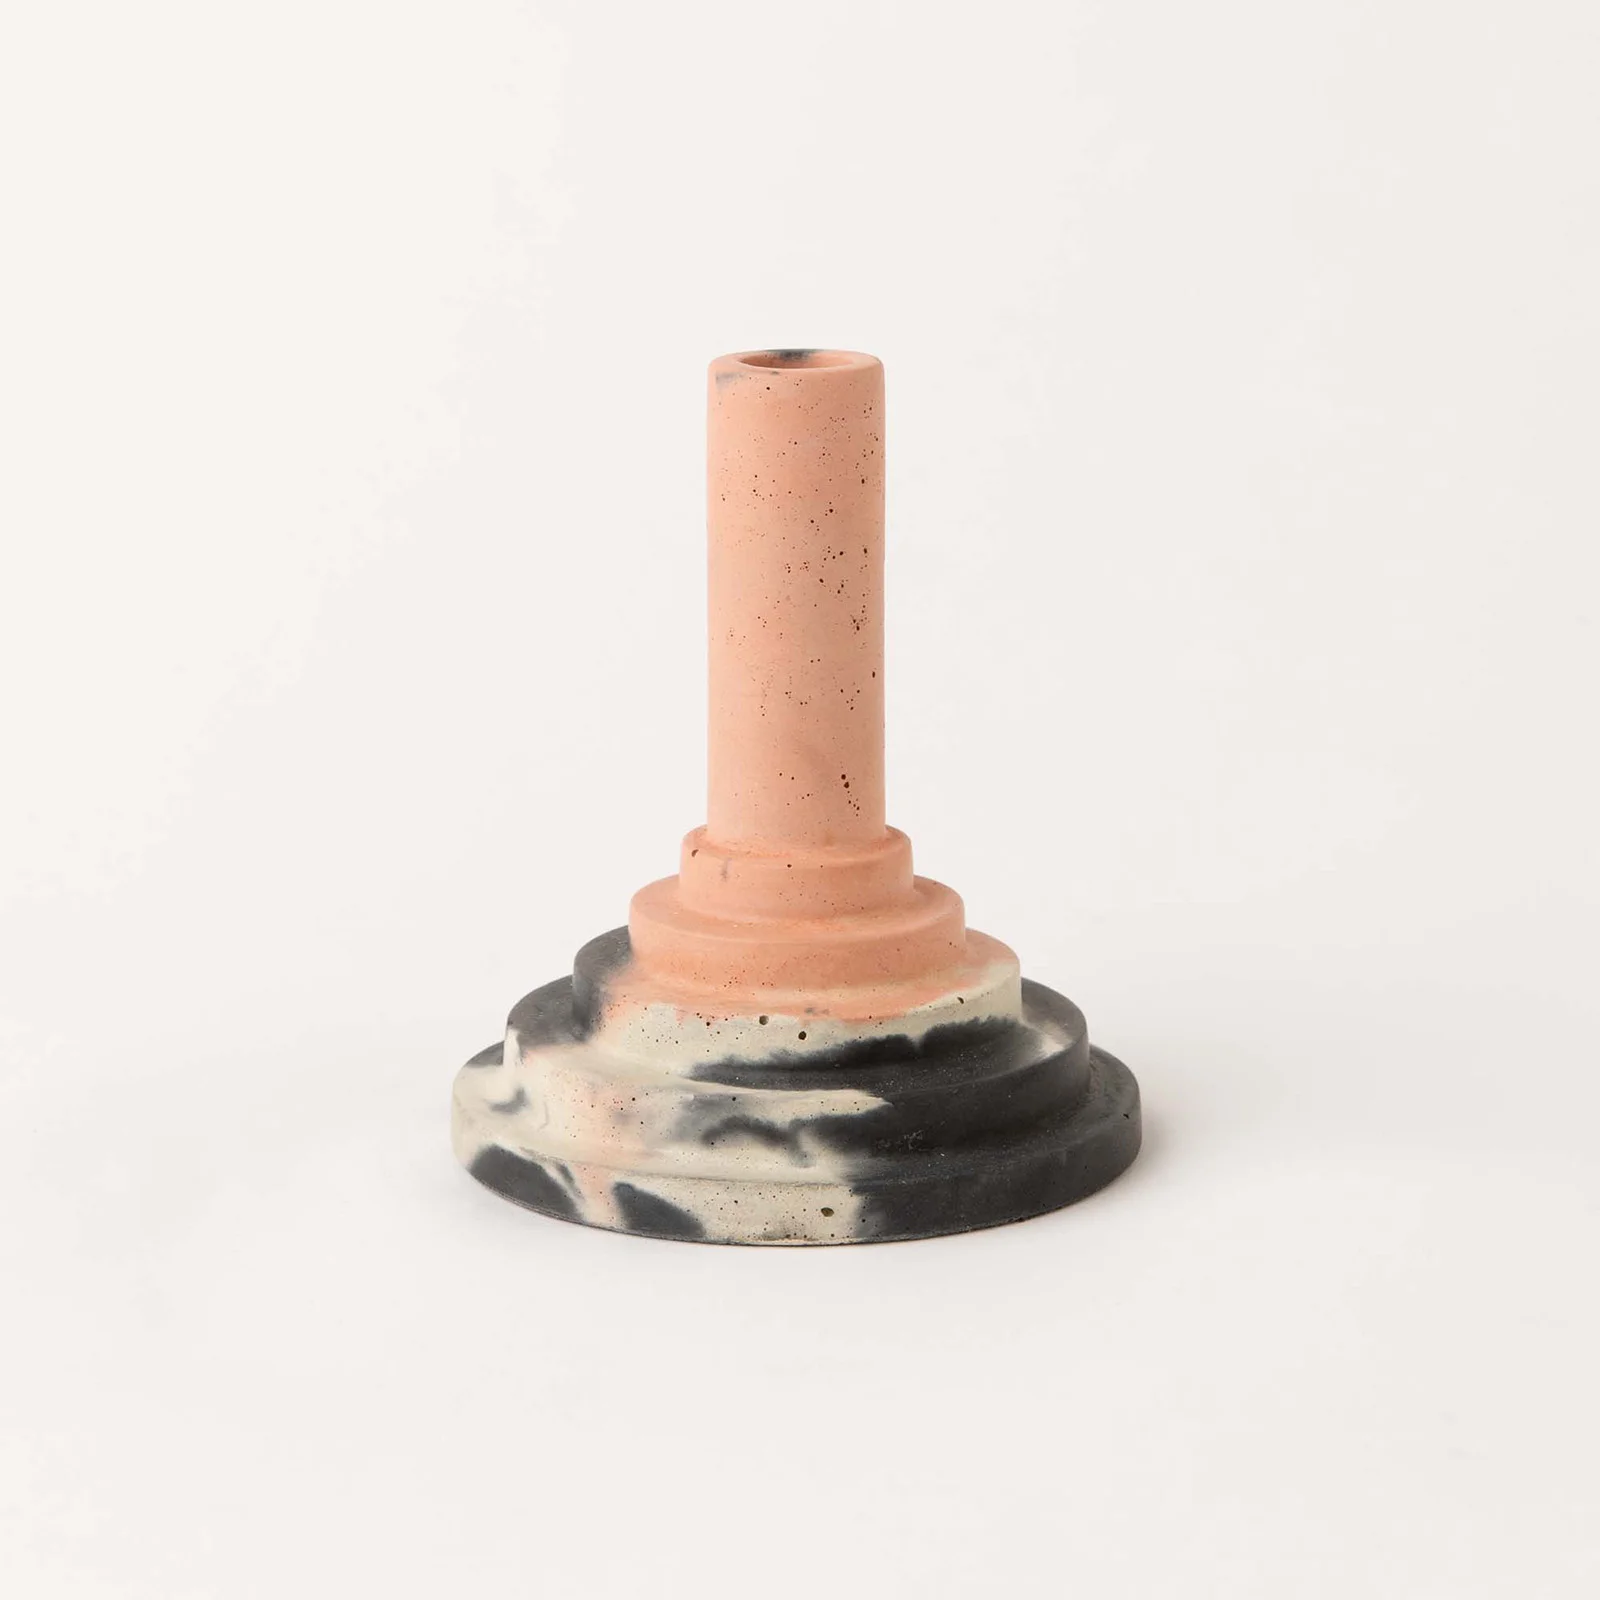 Smith & Goat Disco Stick Concrete Candle Holder - Blush, Charcoal & White Image 1